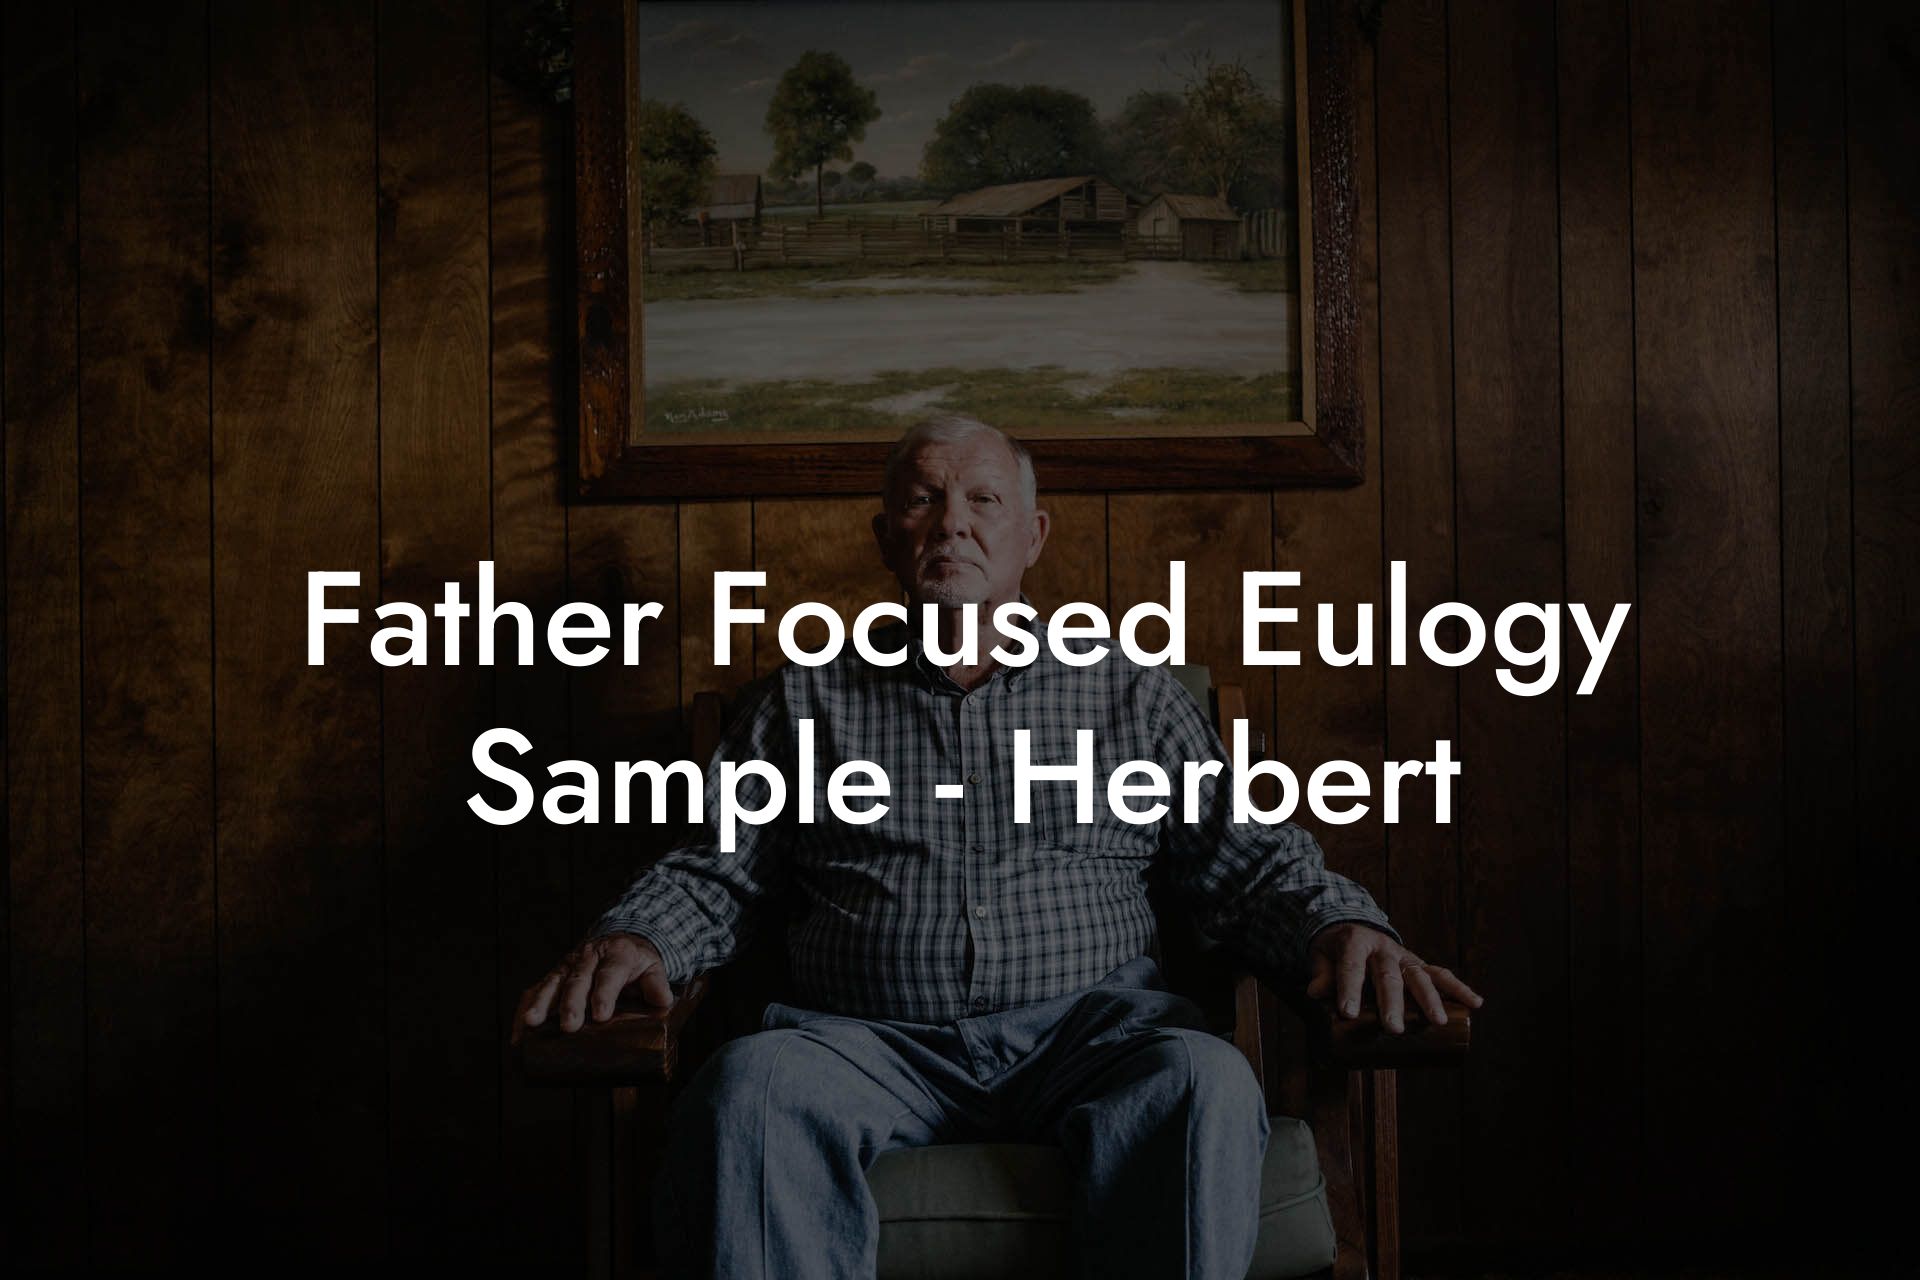 Father Focused Eulogy Sample - Herbert